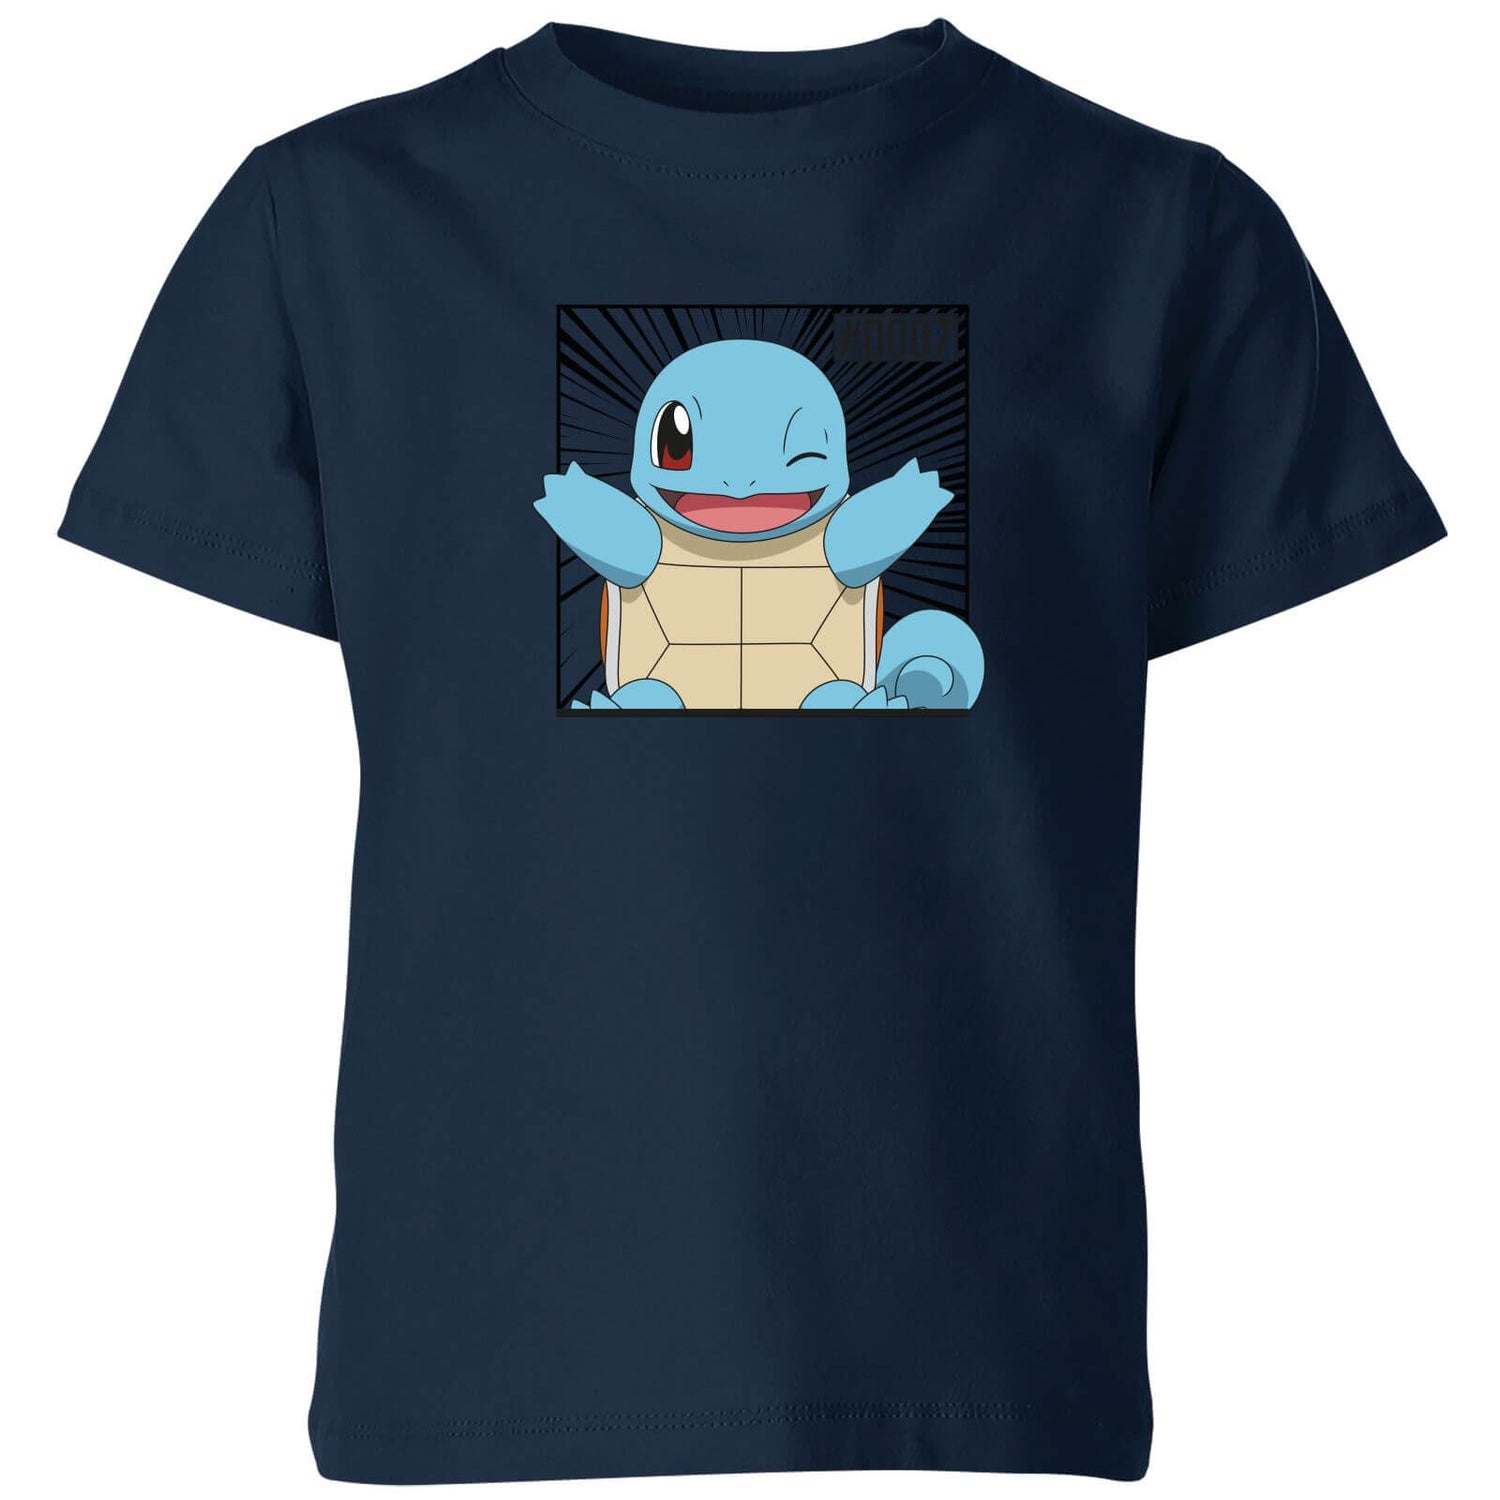 Pokémon Pokédex Squirtle #0007 Kids' T-Shirt - Navy